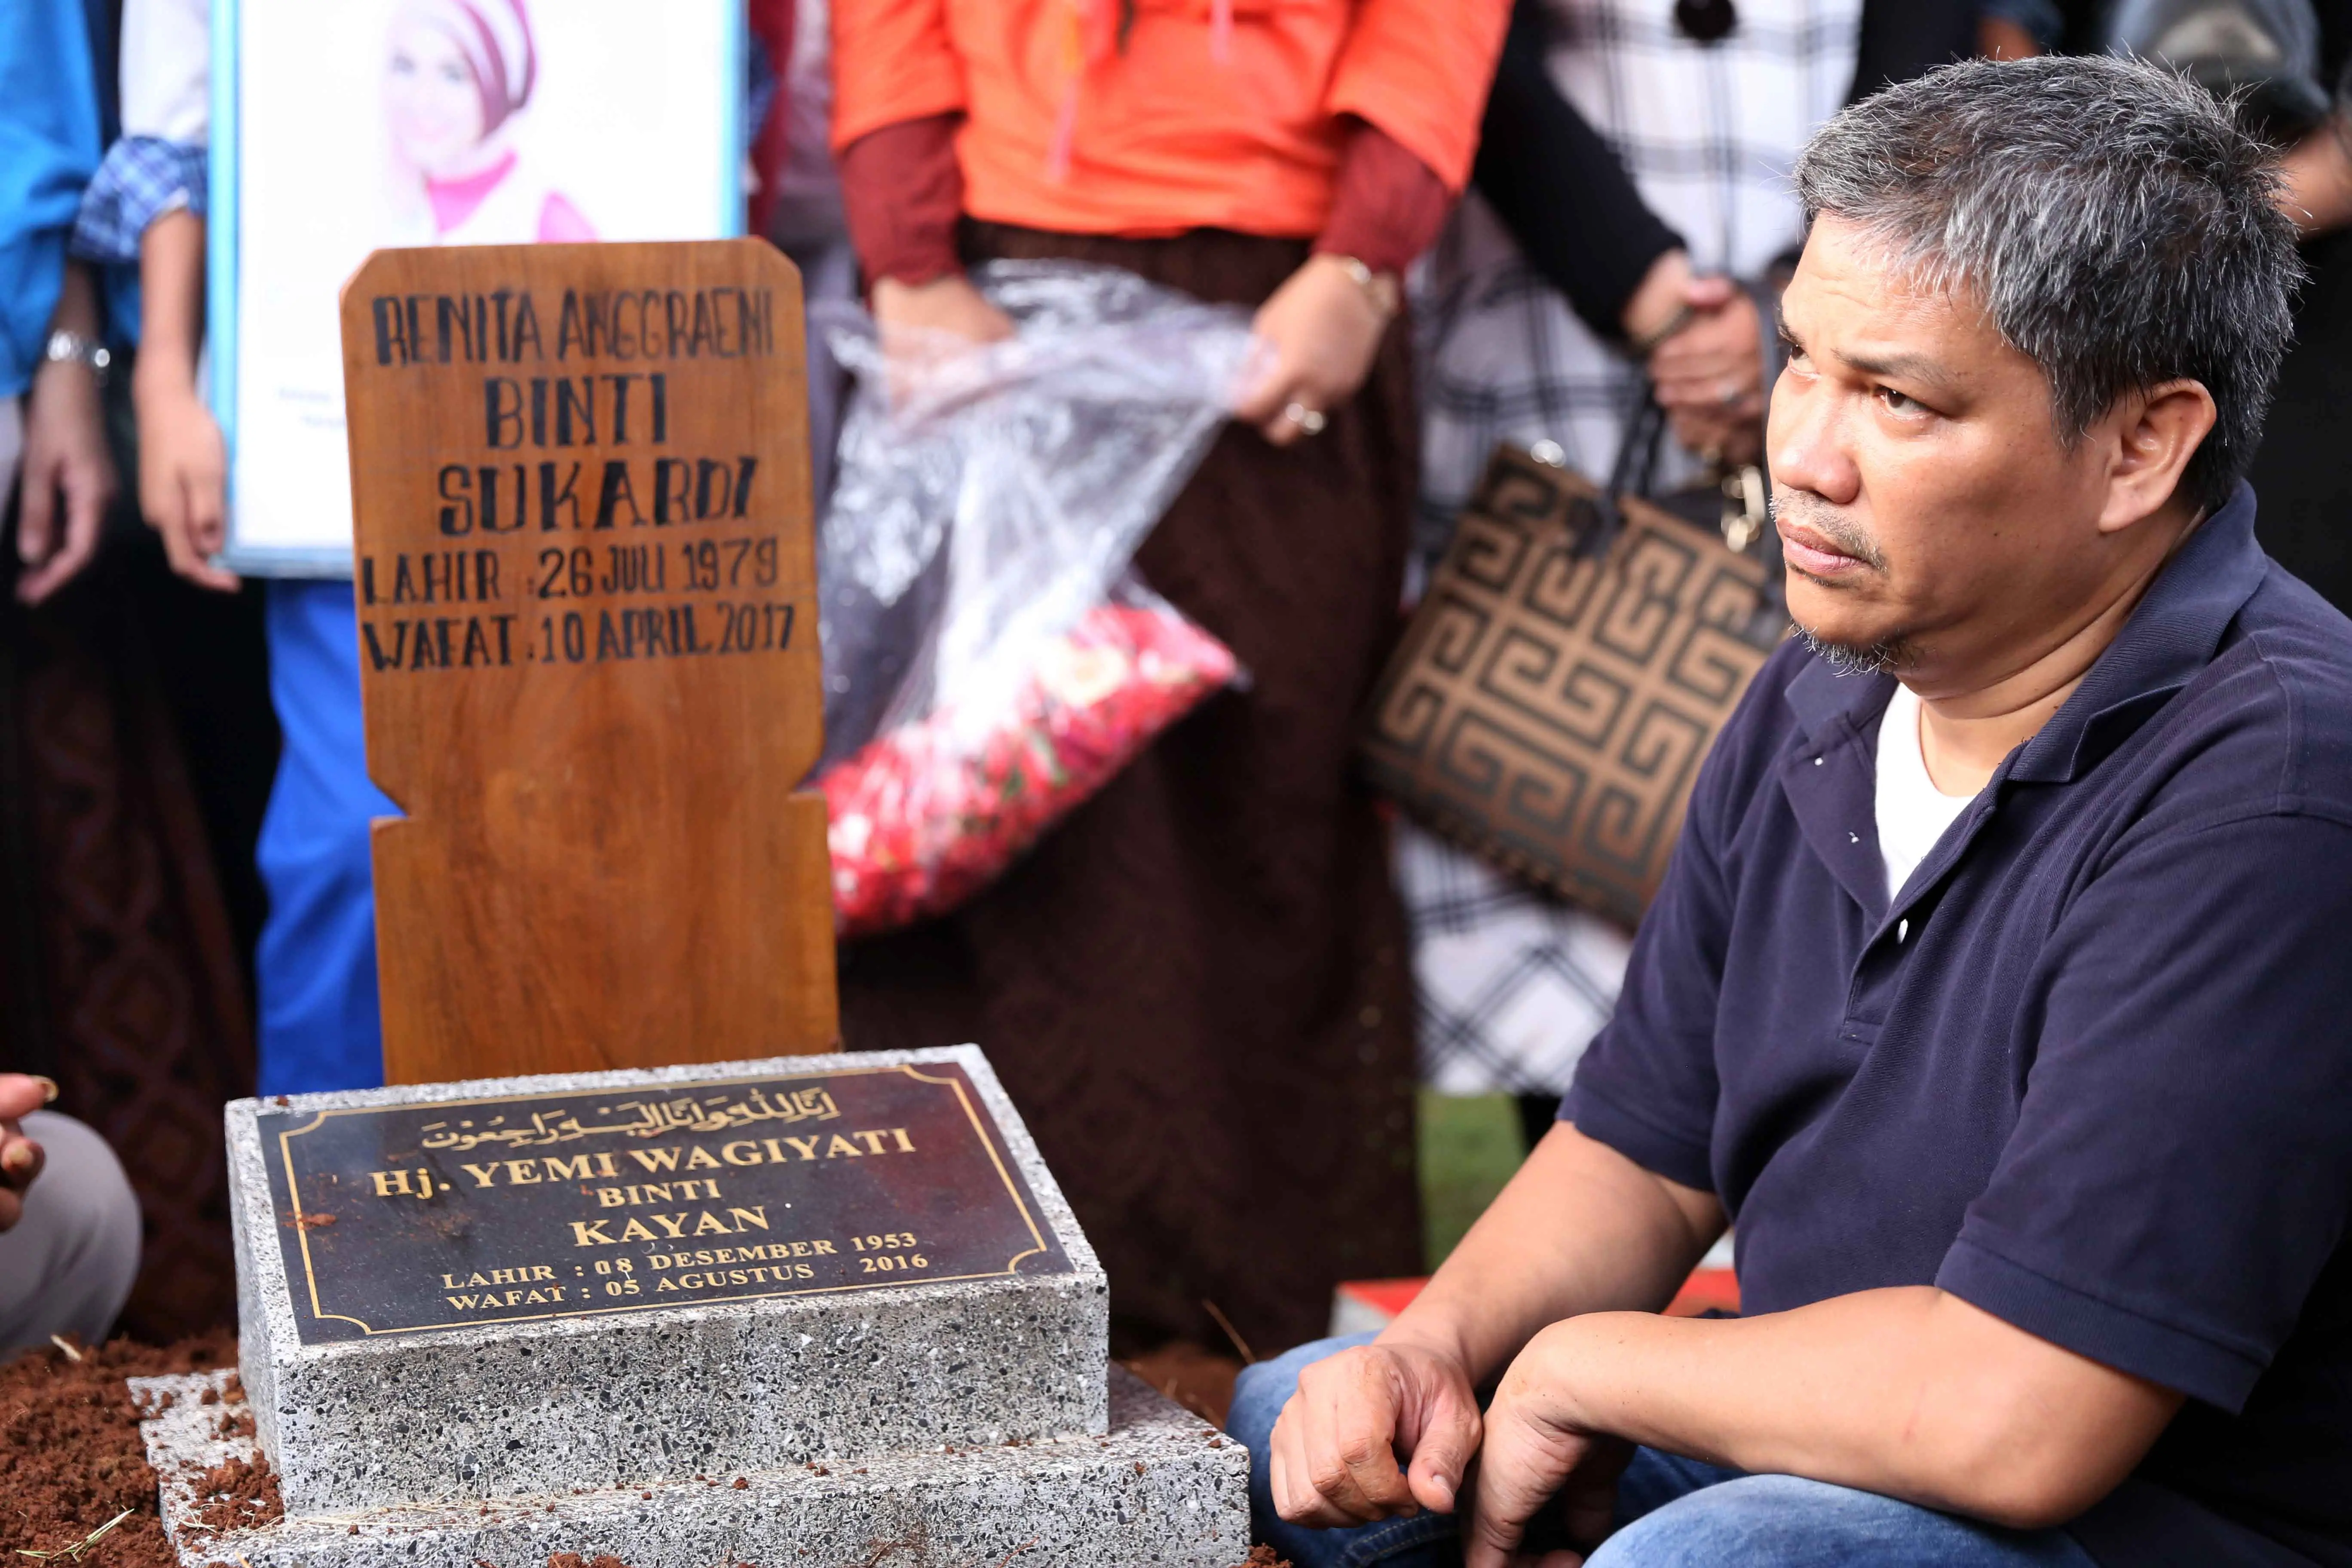 Suami Renita Sukardi di pemakaman (Nurwahyunan/bintang.com)